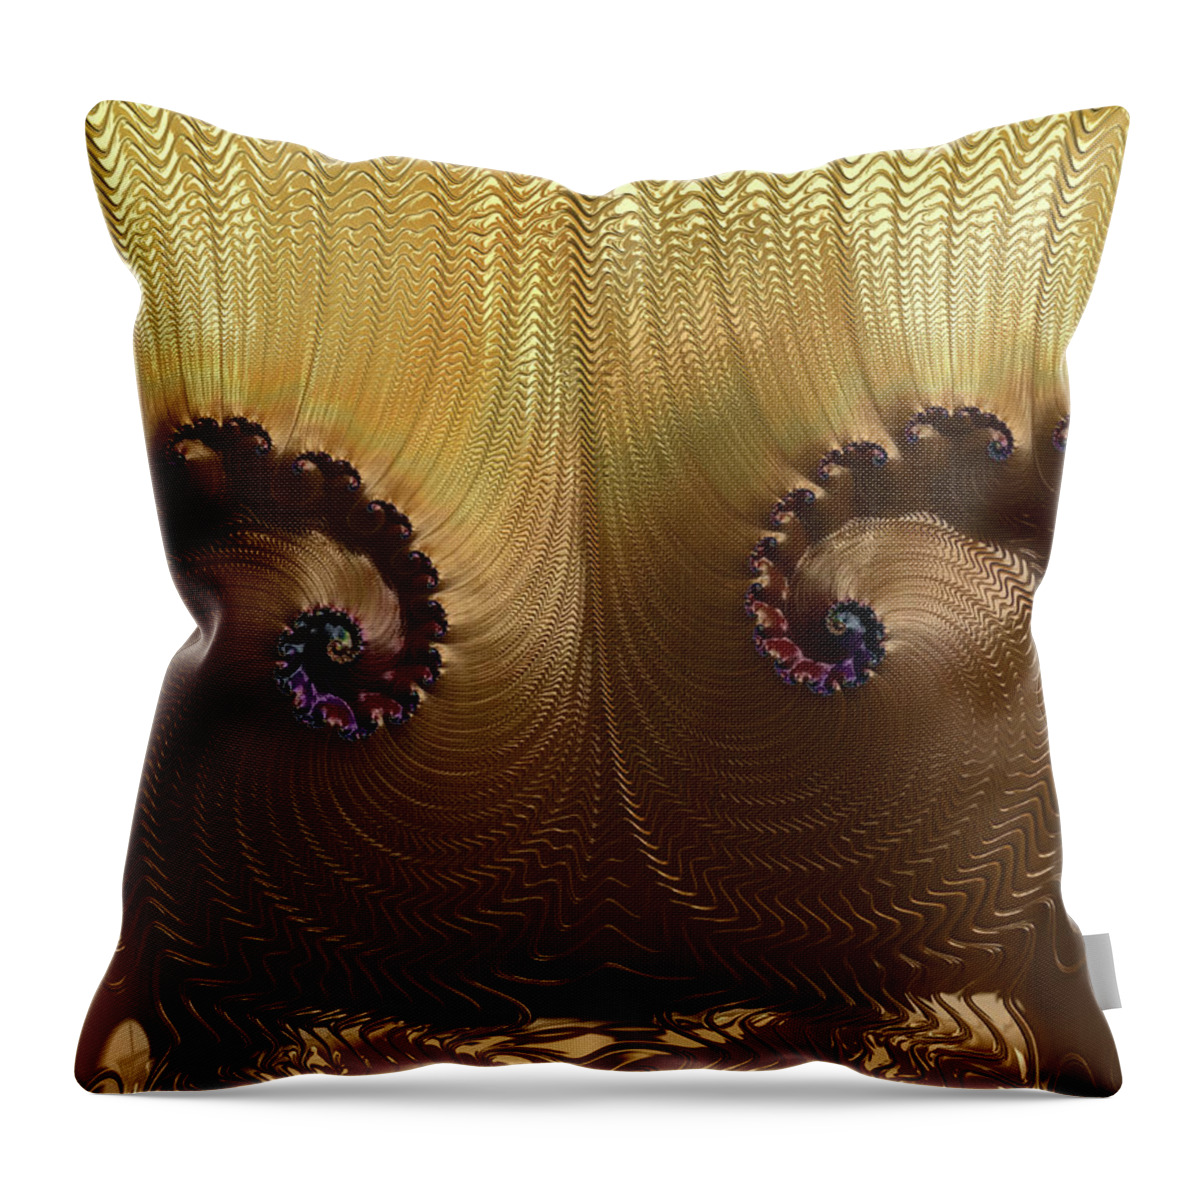 Egyptian God Throw Pillow featuring the digital art Egyptian God by Becky Herrera